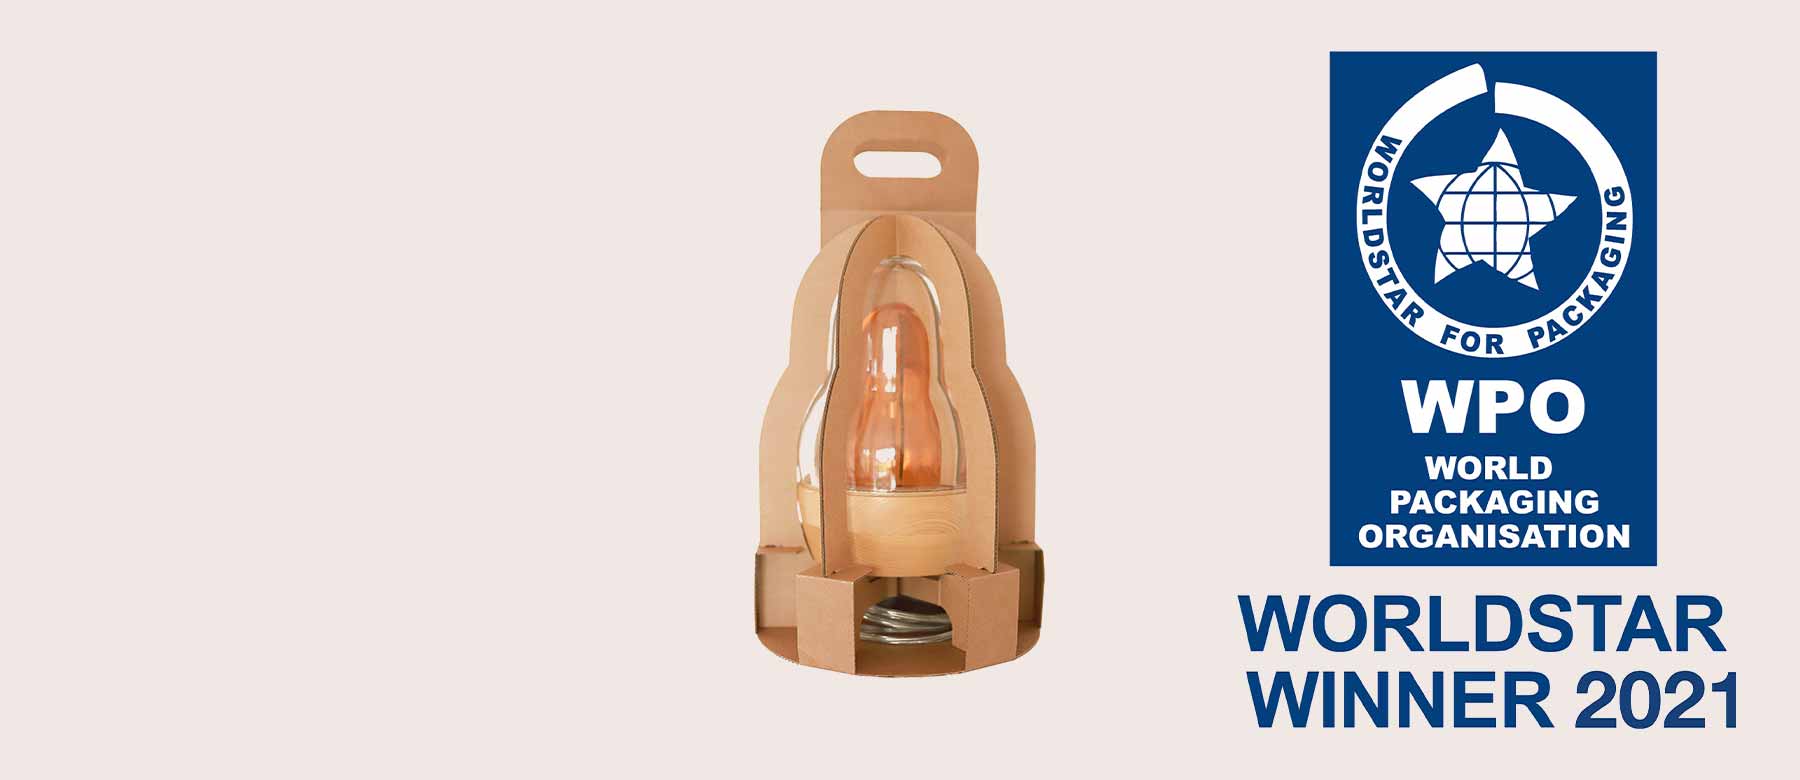 THIMM designer lamp packaging receives the 2021 WorldStar Packaging Award